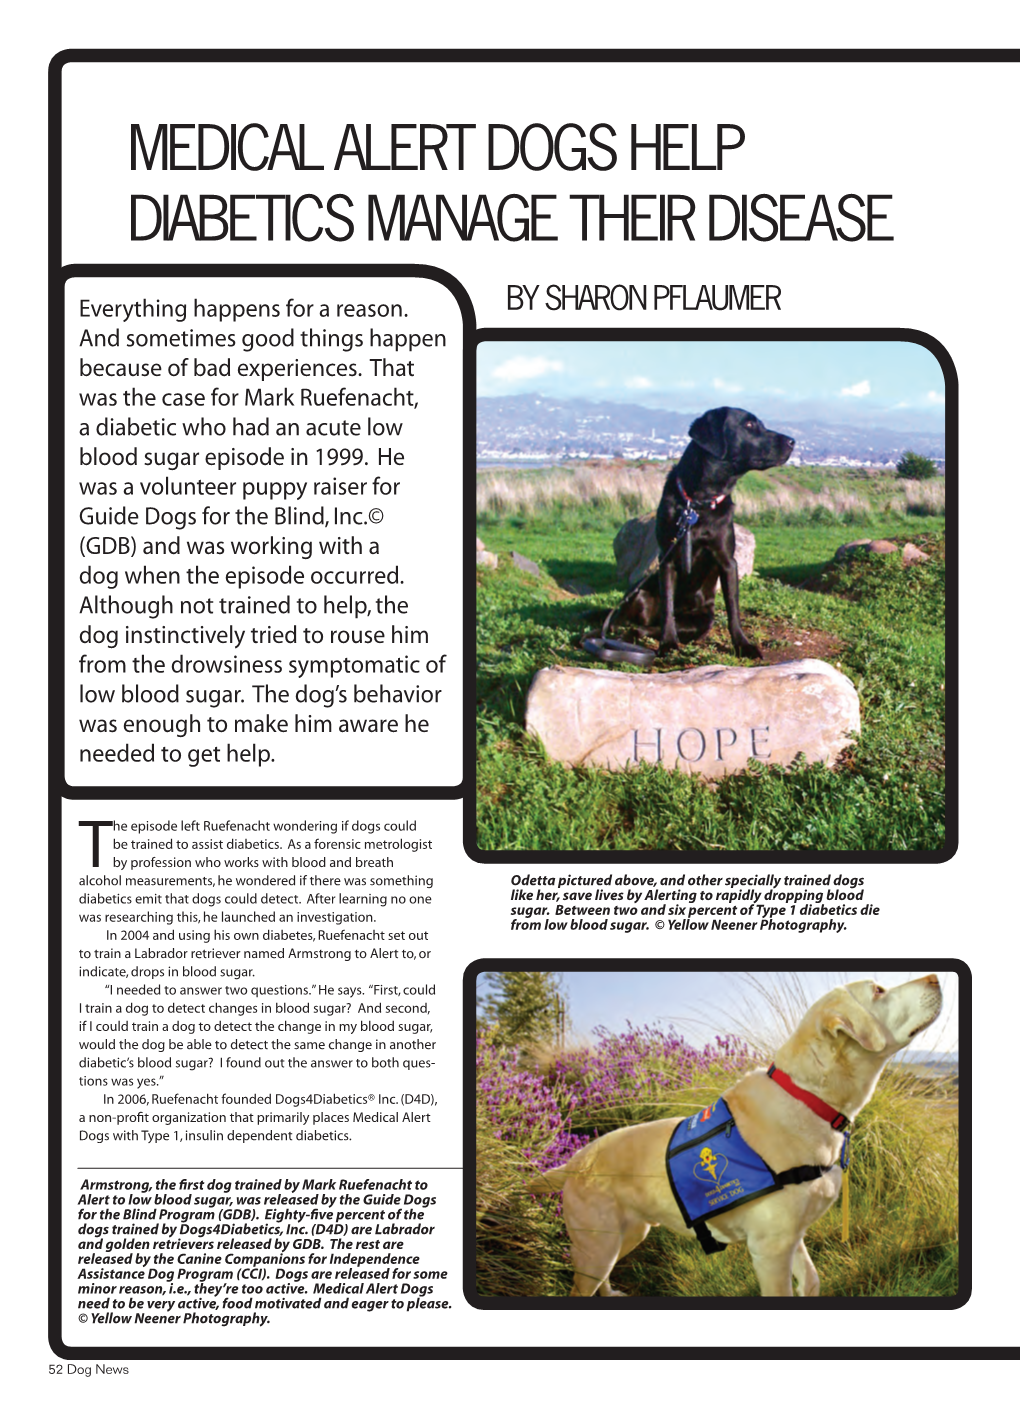 Medical Alert Dogs Help Diabetics Manage Their Disease